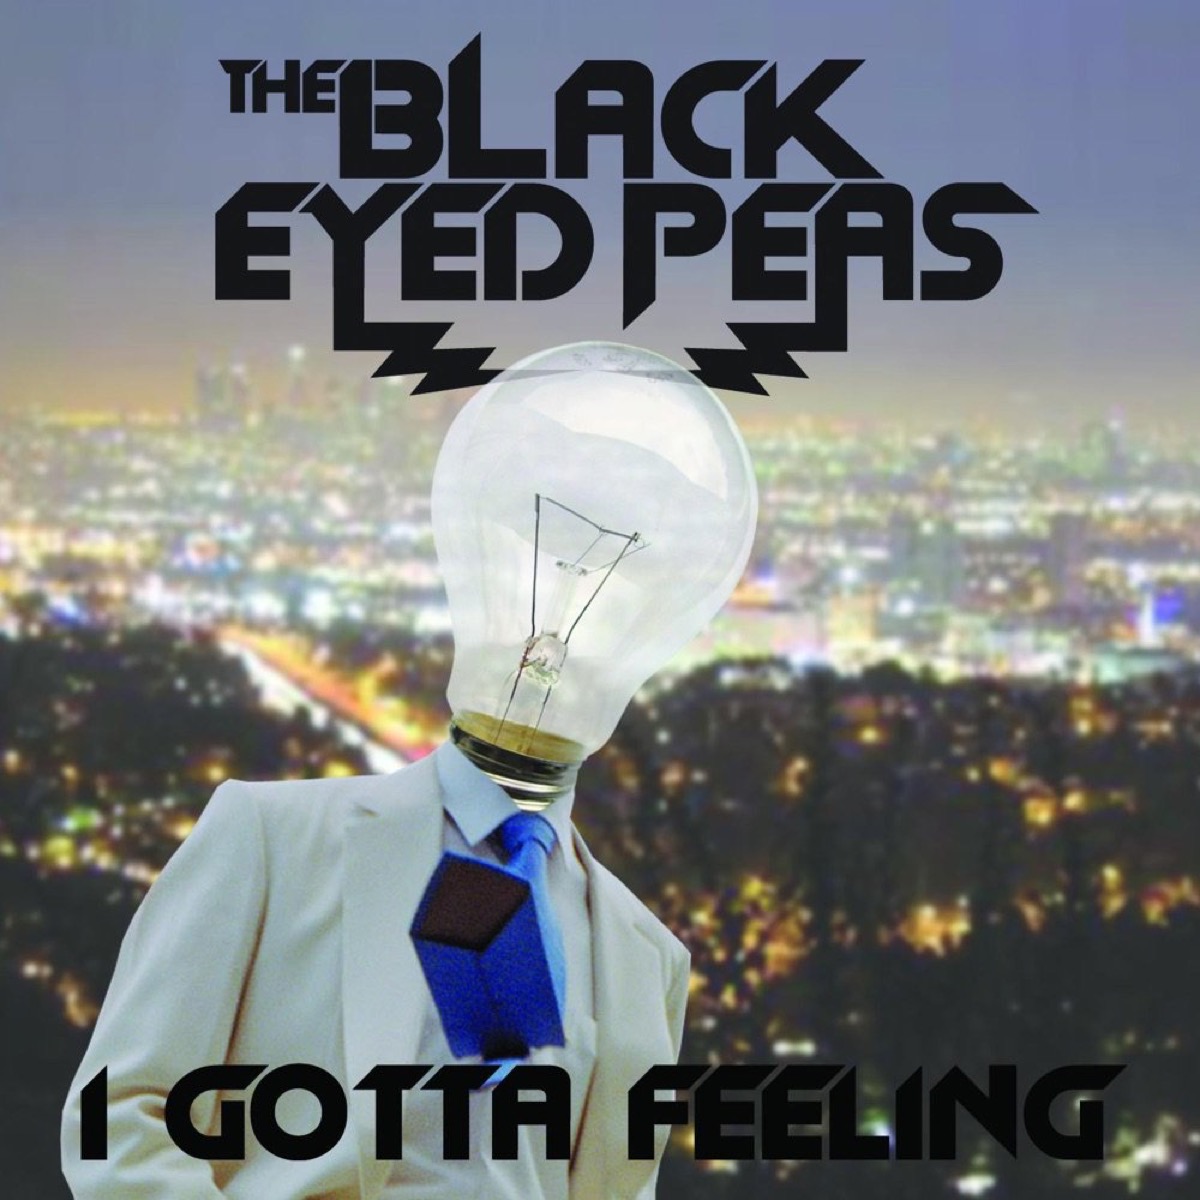 Black Eyed Peas "I Gotta Feeling" single cover